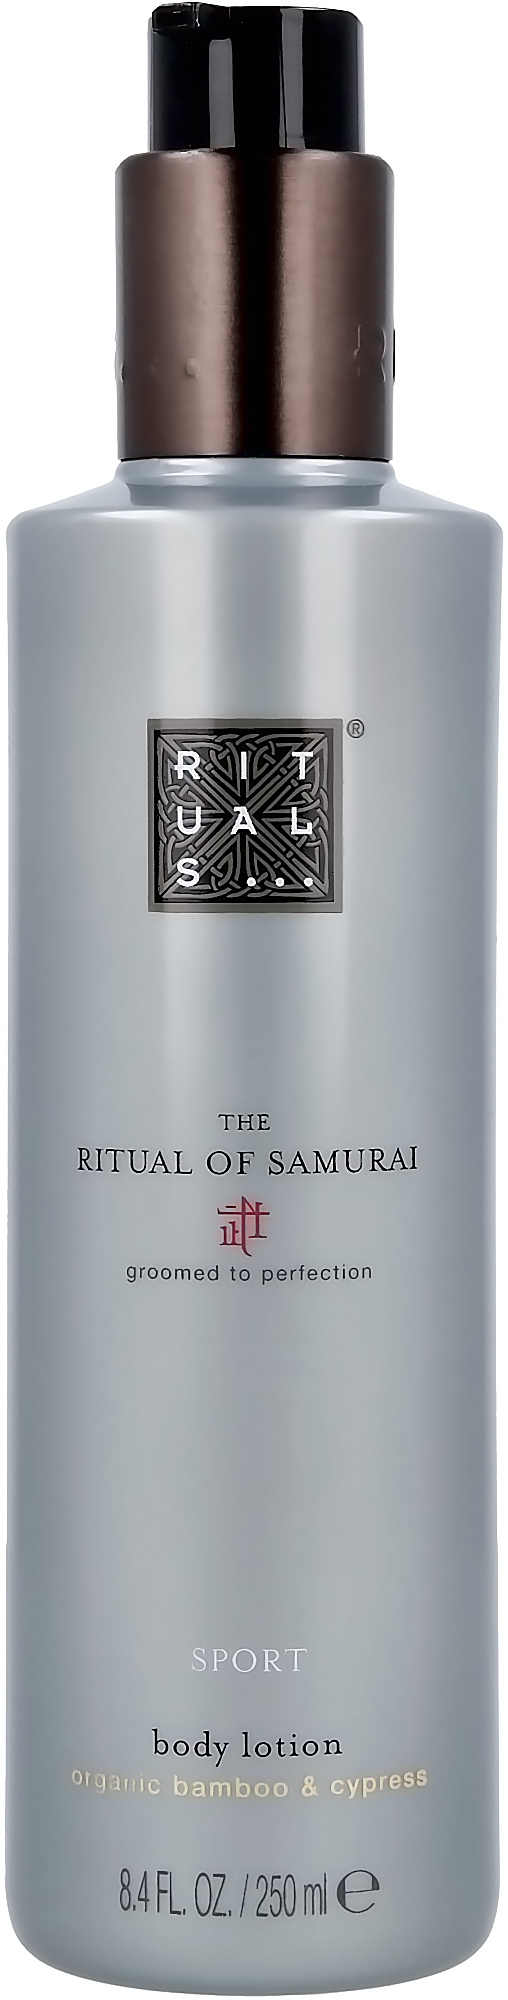 Rituals THE RITUAL OF SAMURAI BODY MOISTURISER